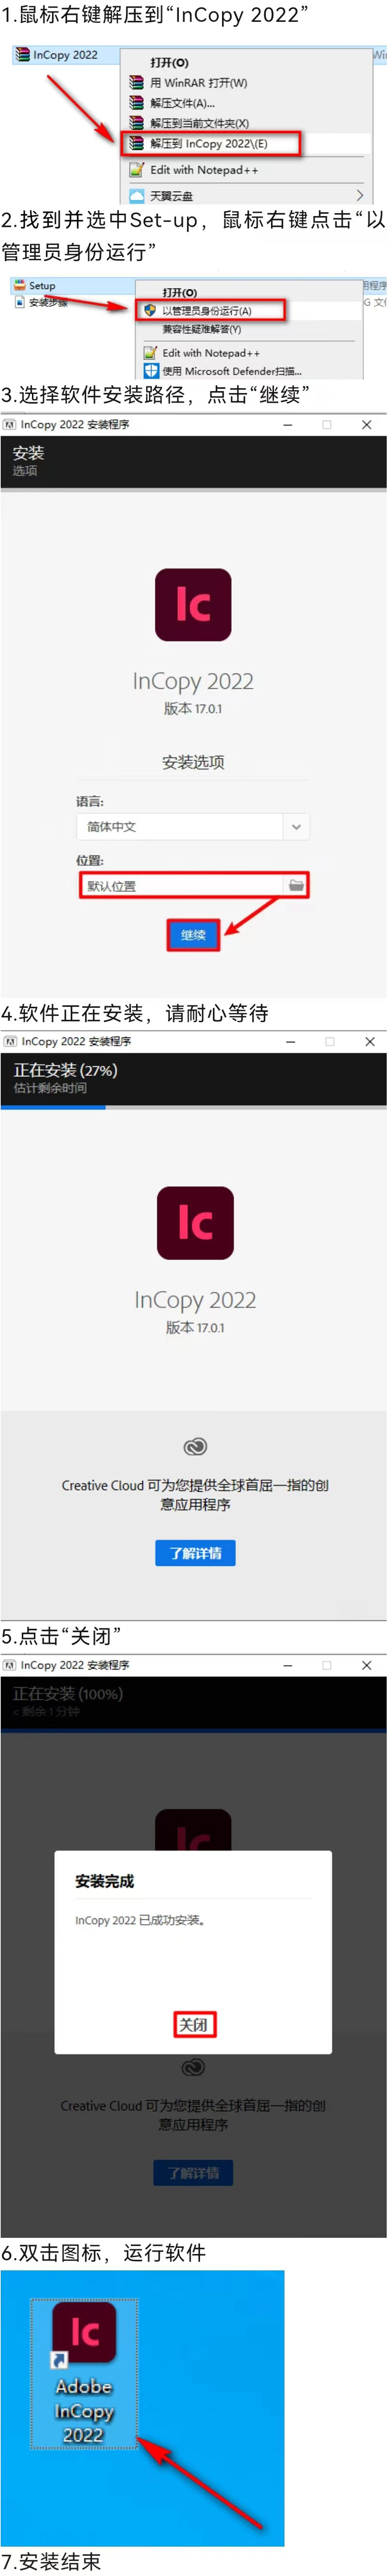 Adobe InCopy 2022װ̳.jpg